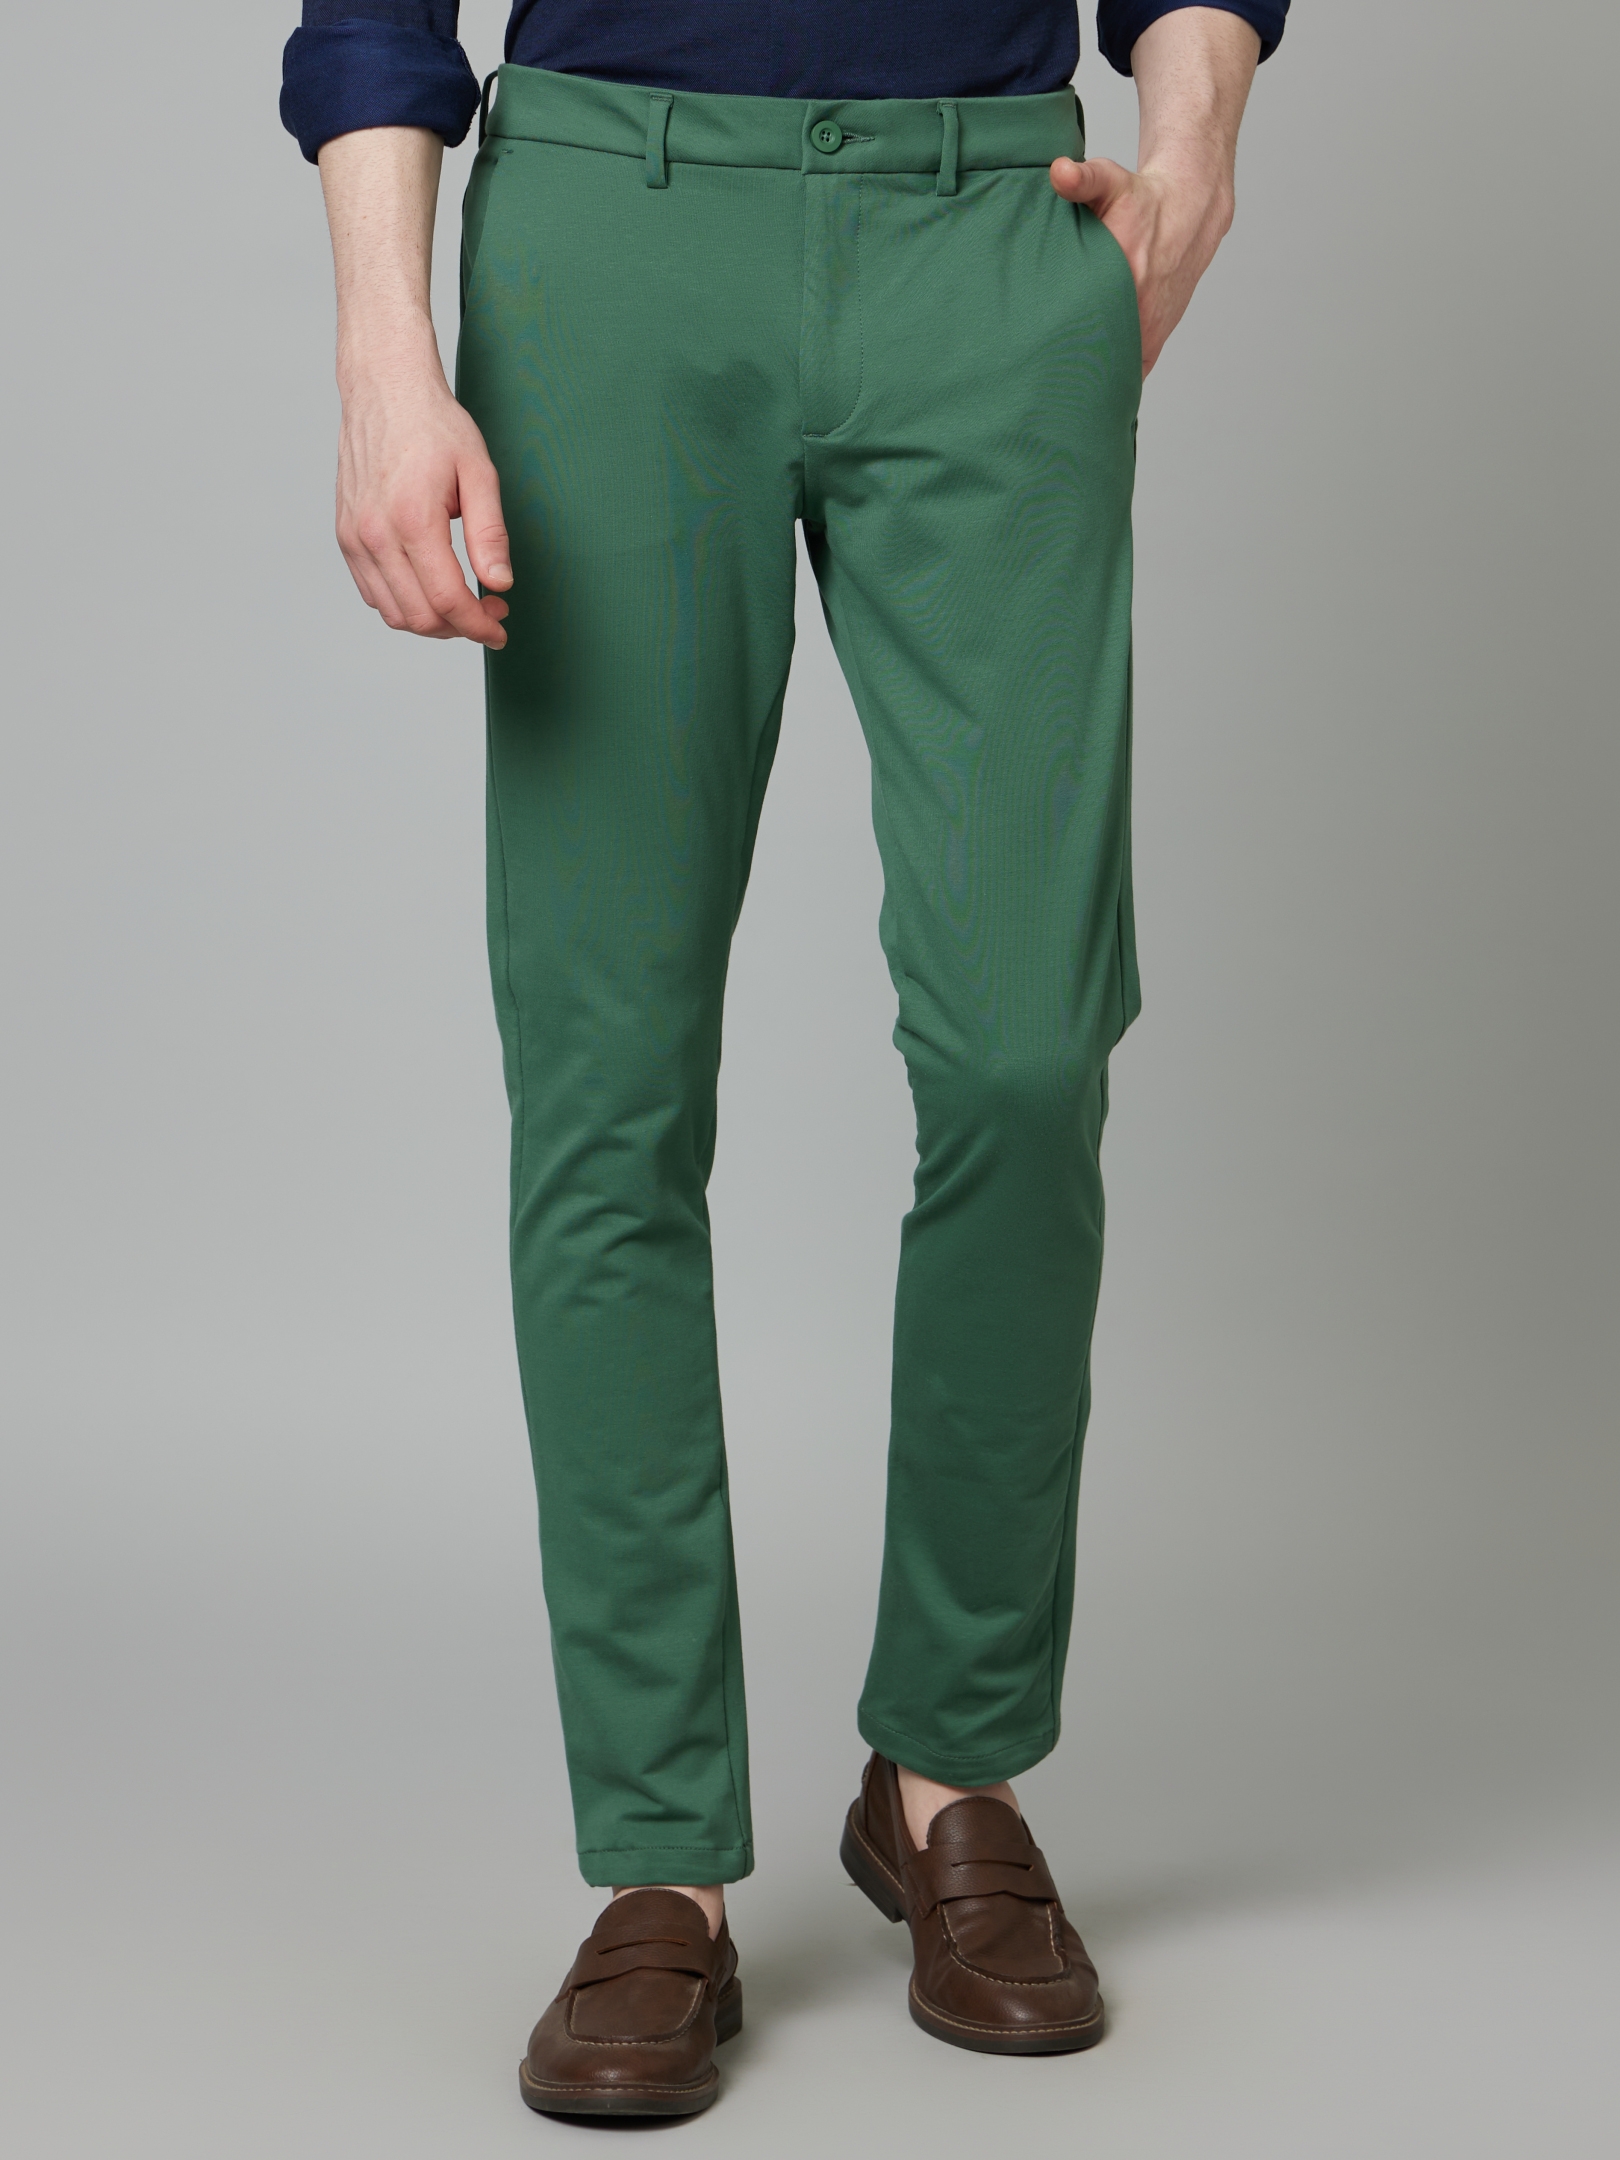 celio | Men's Green Cotton Blend Solid Chinos